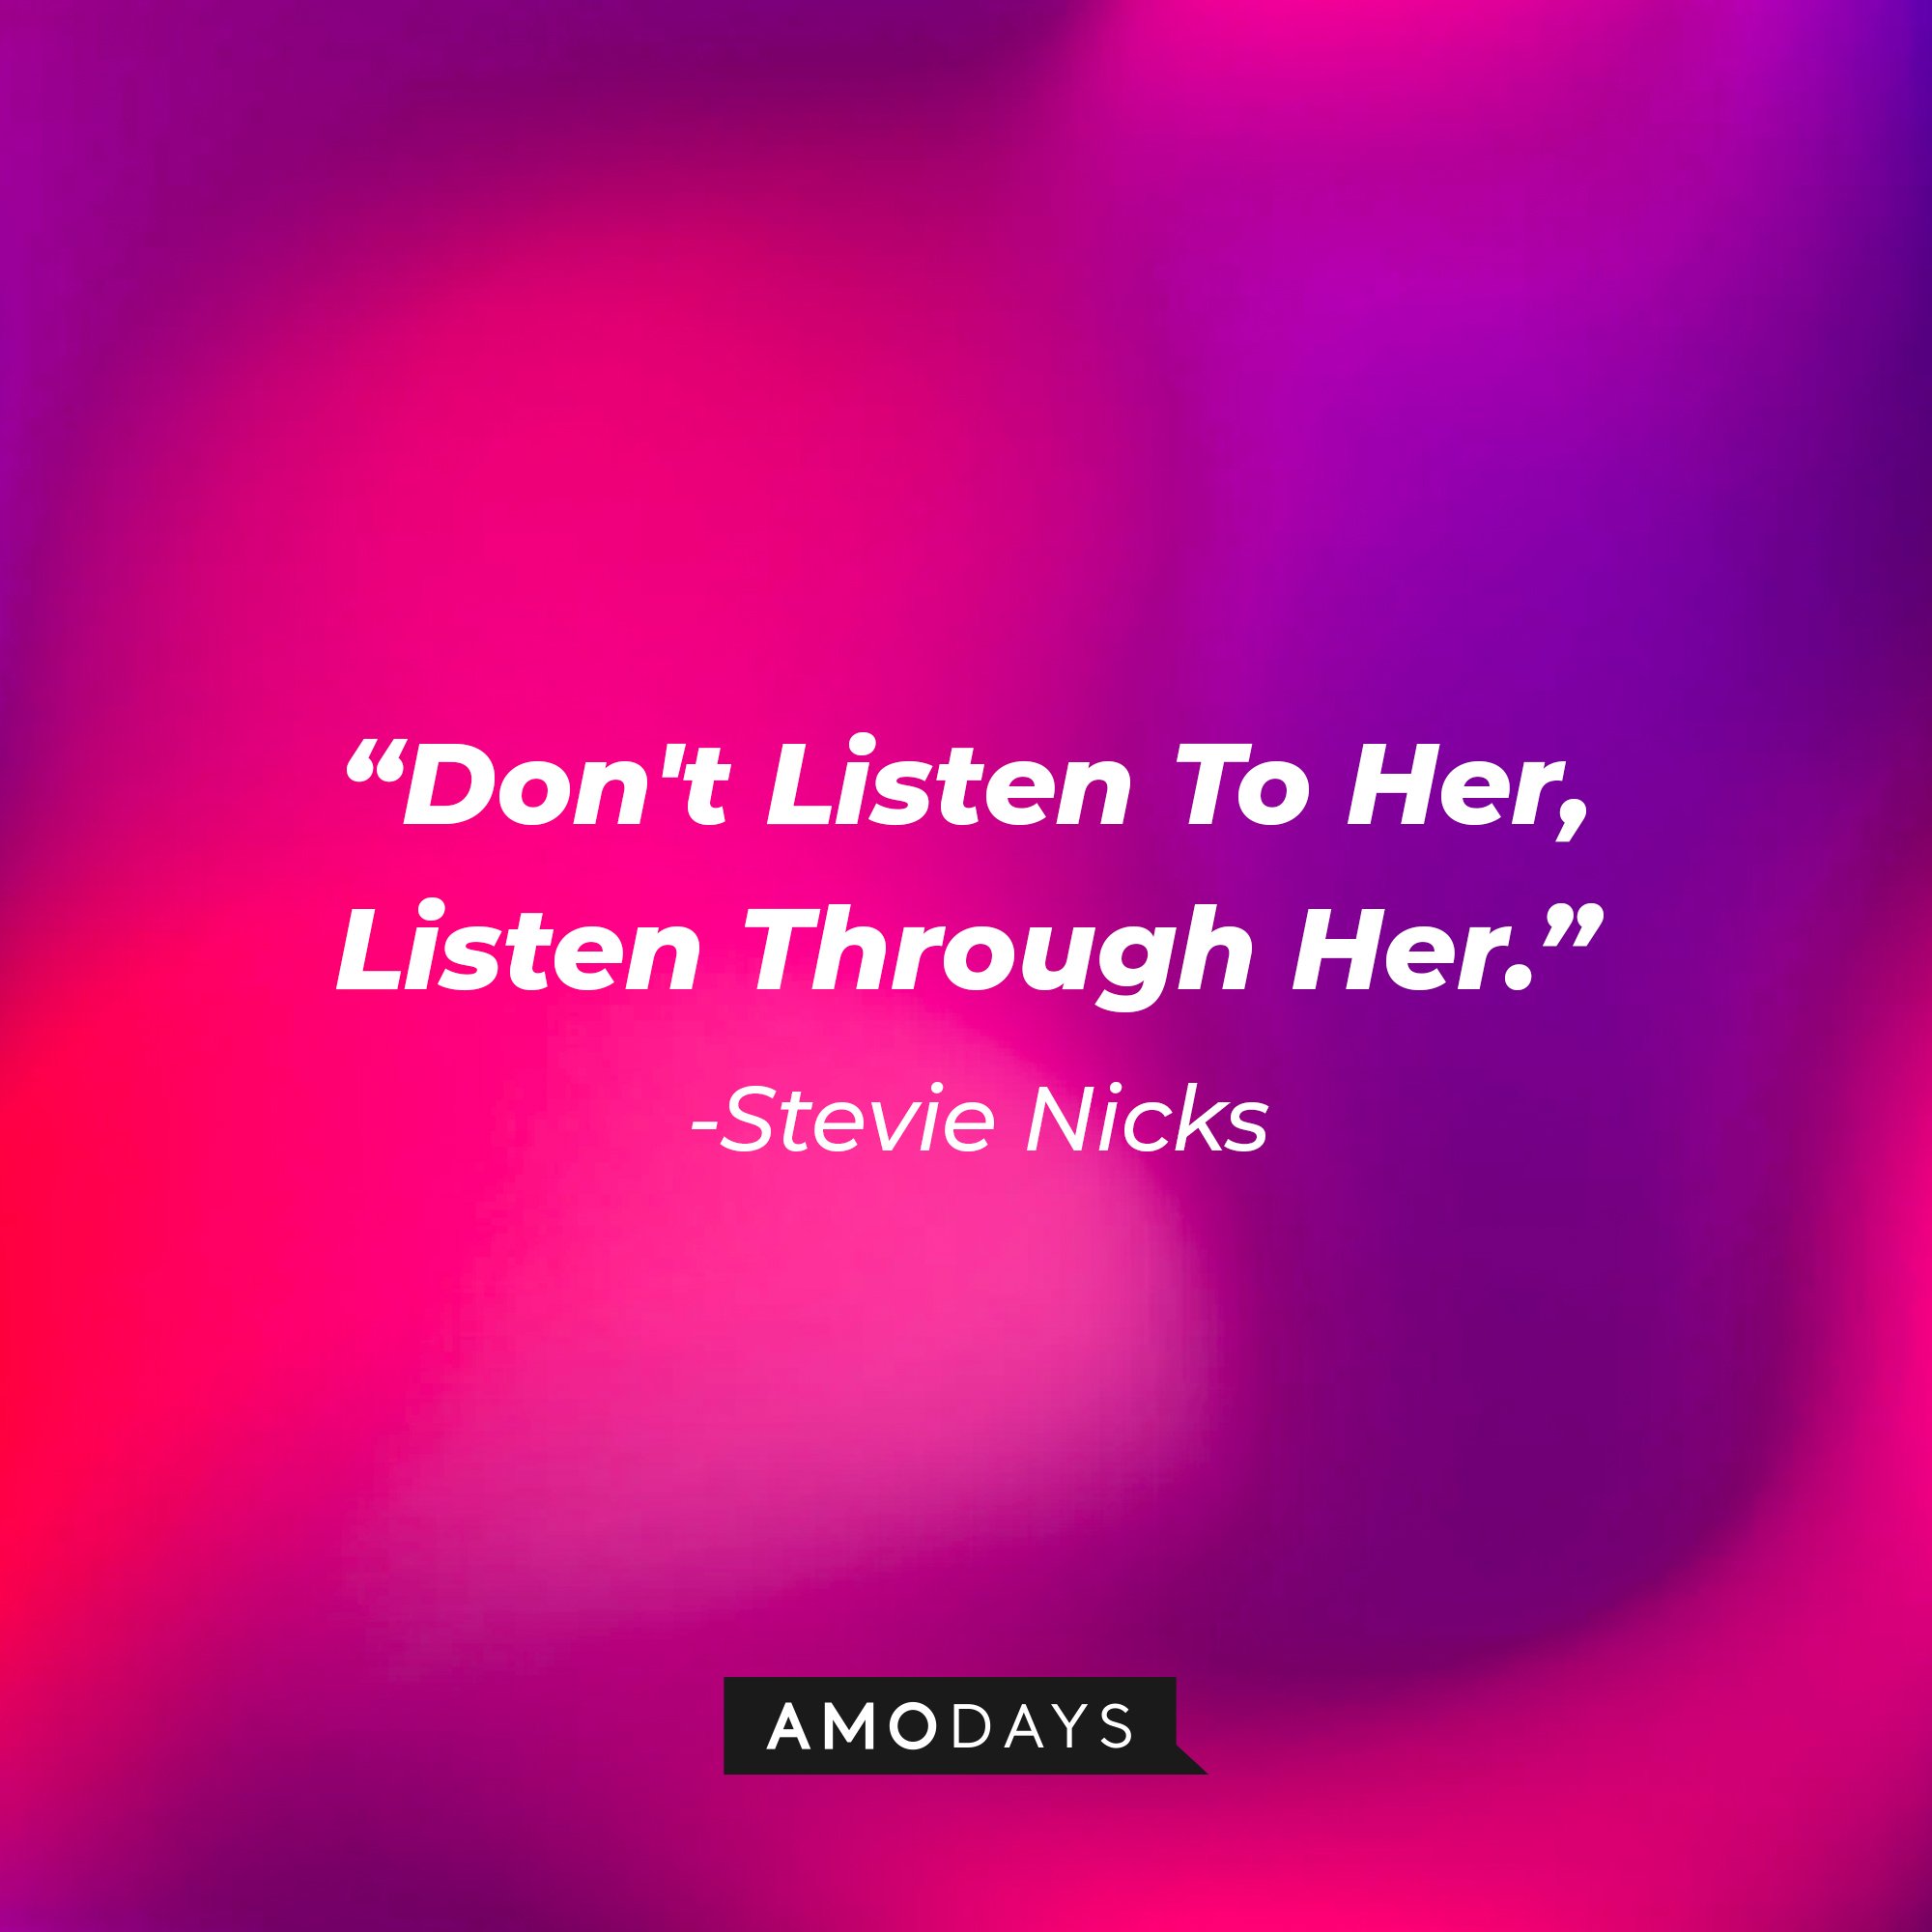 Stevie Nicks's quote: "Don't Listen To Her, Listen Through Her." | Image: AmoDays